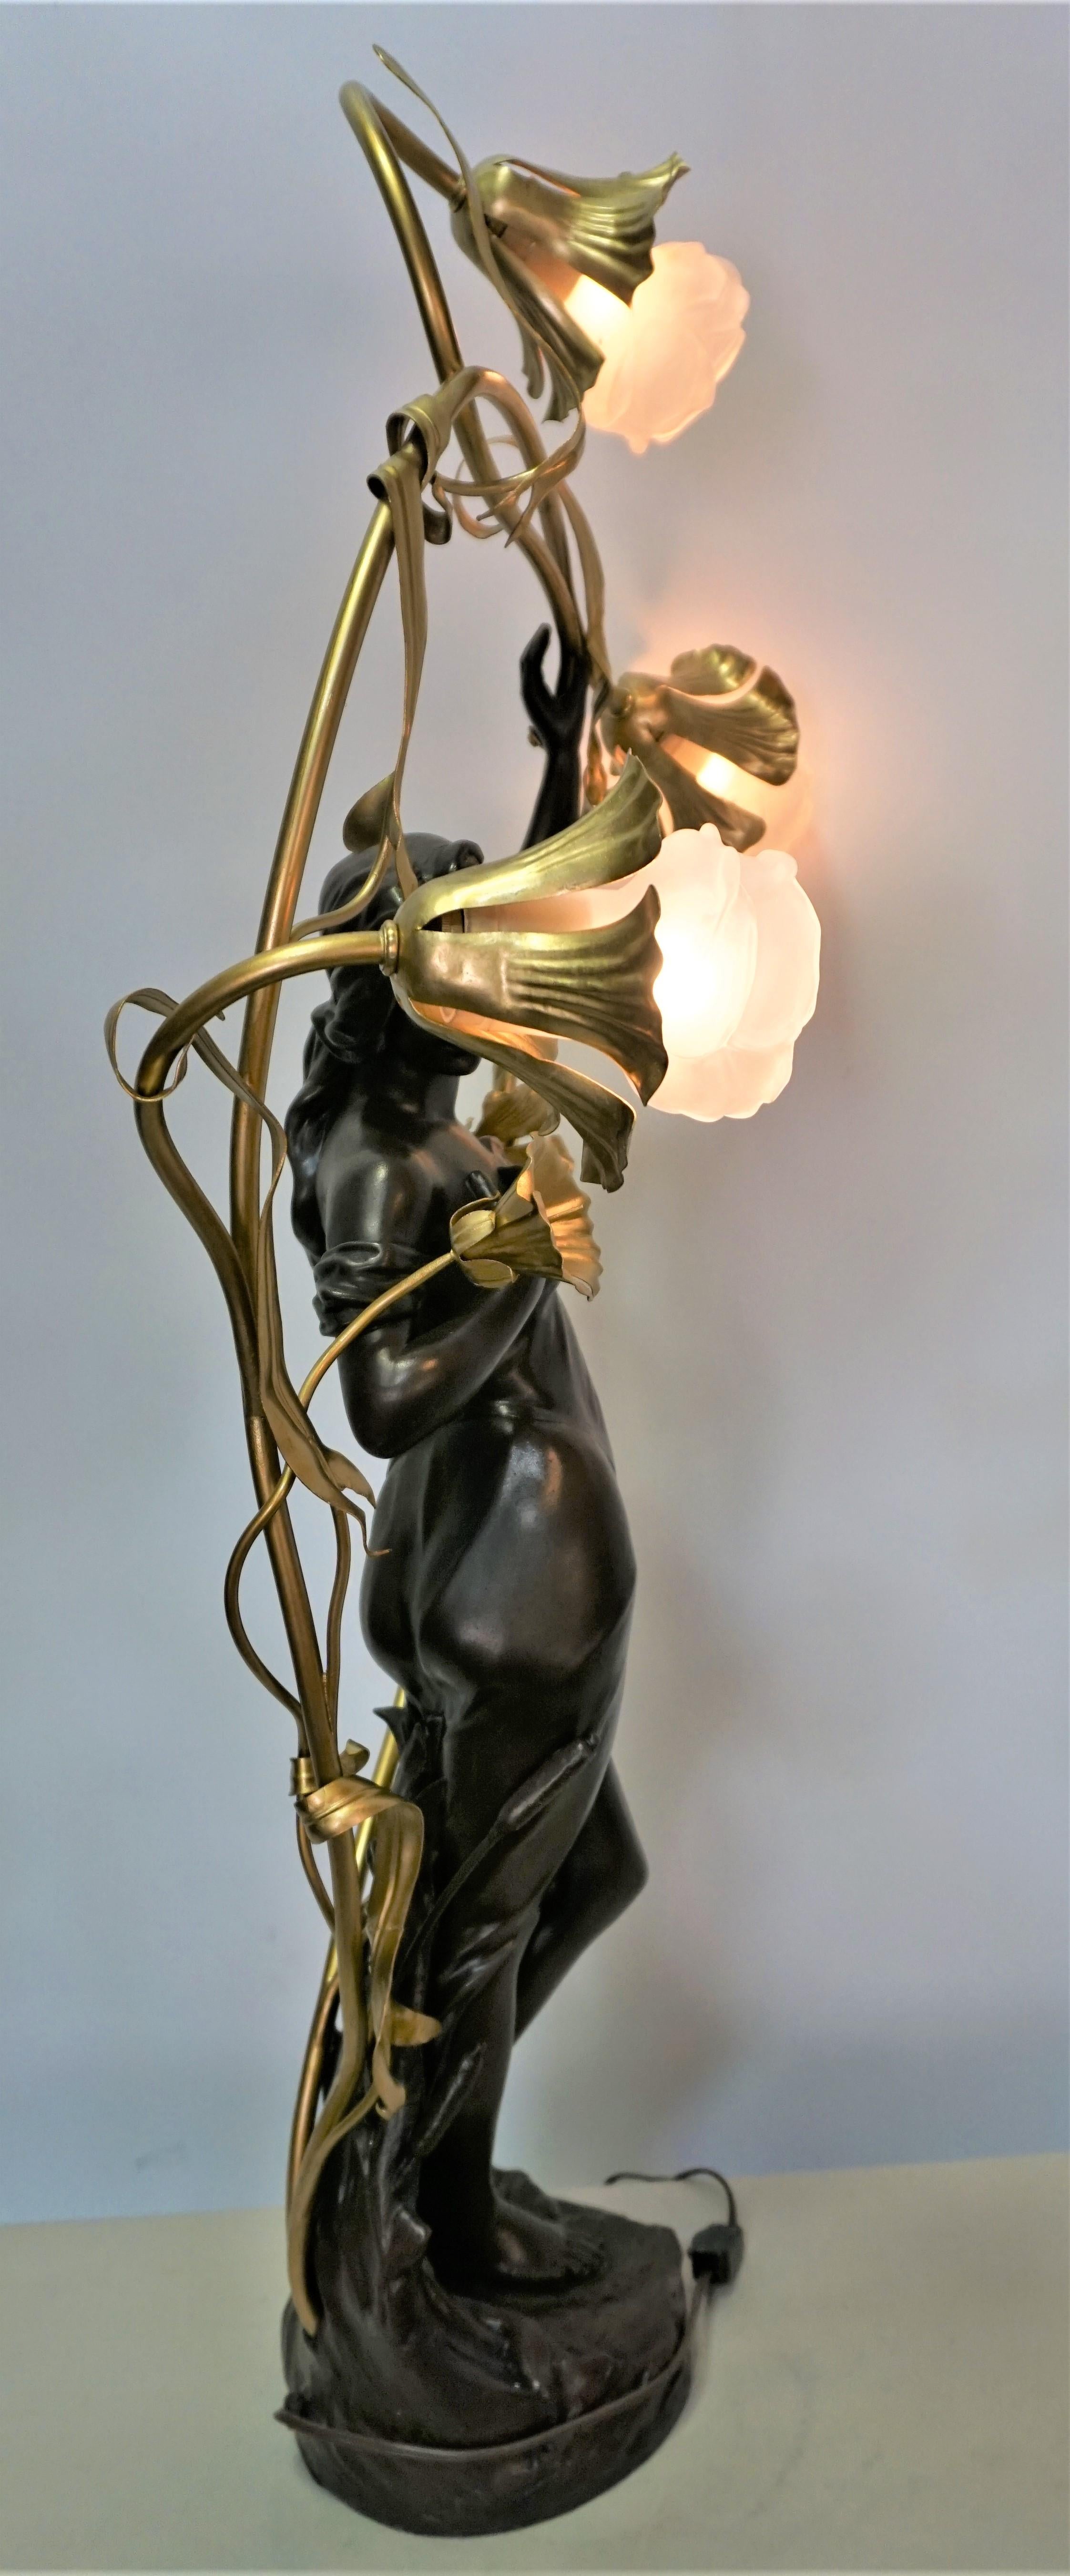 Early 20th Century Art Nouveau Sculpture Table Lamp